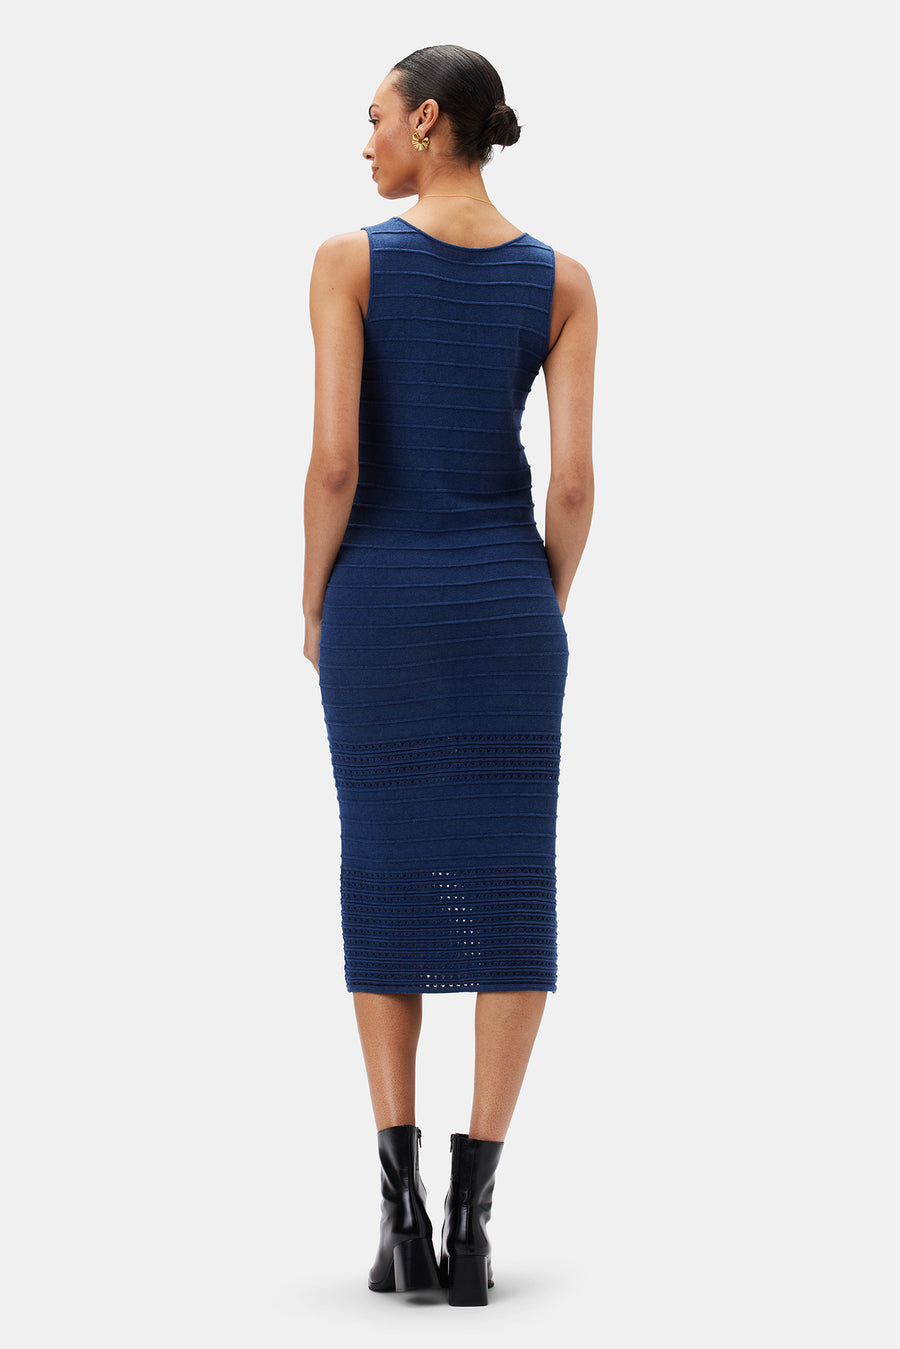 Cora Dress - Navy Blue